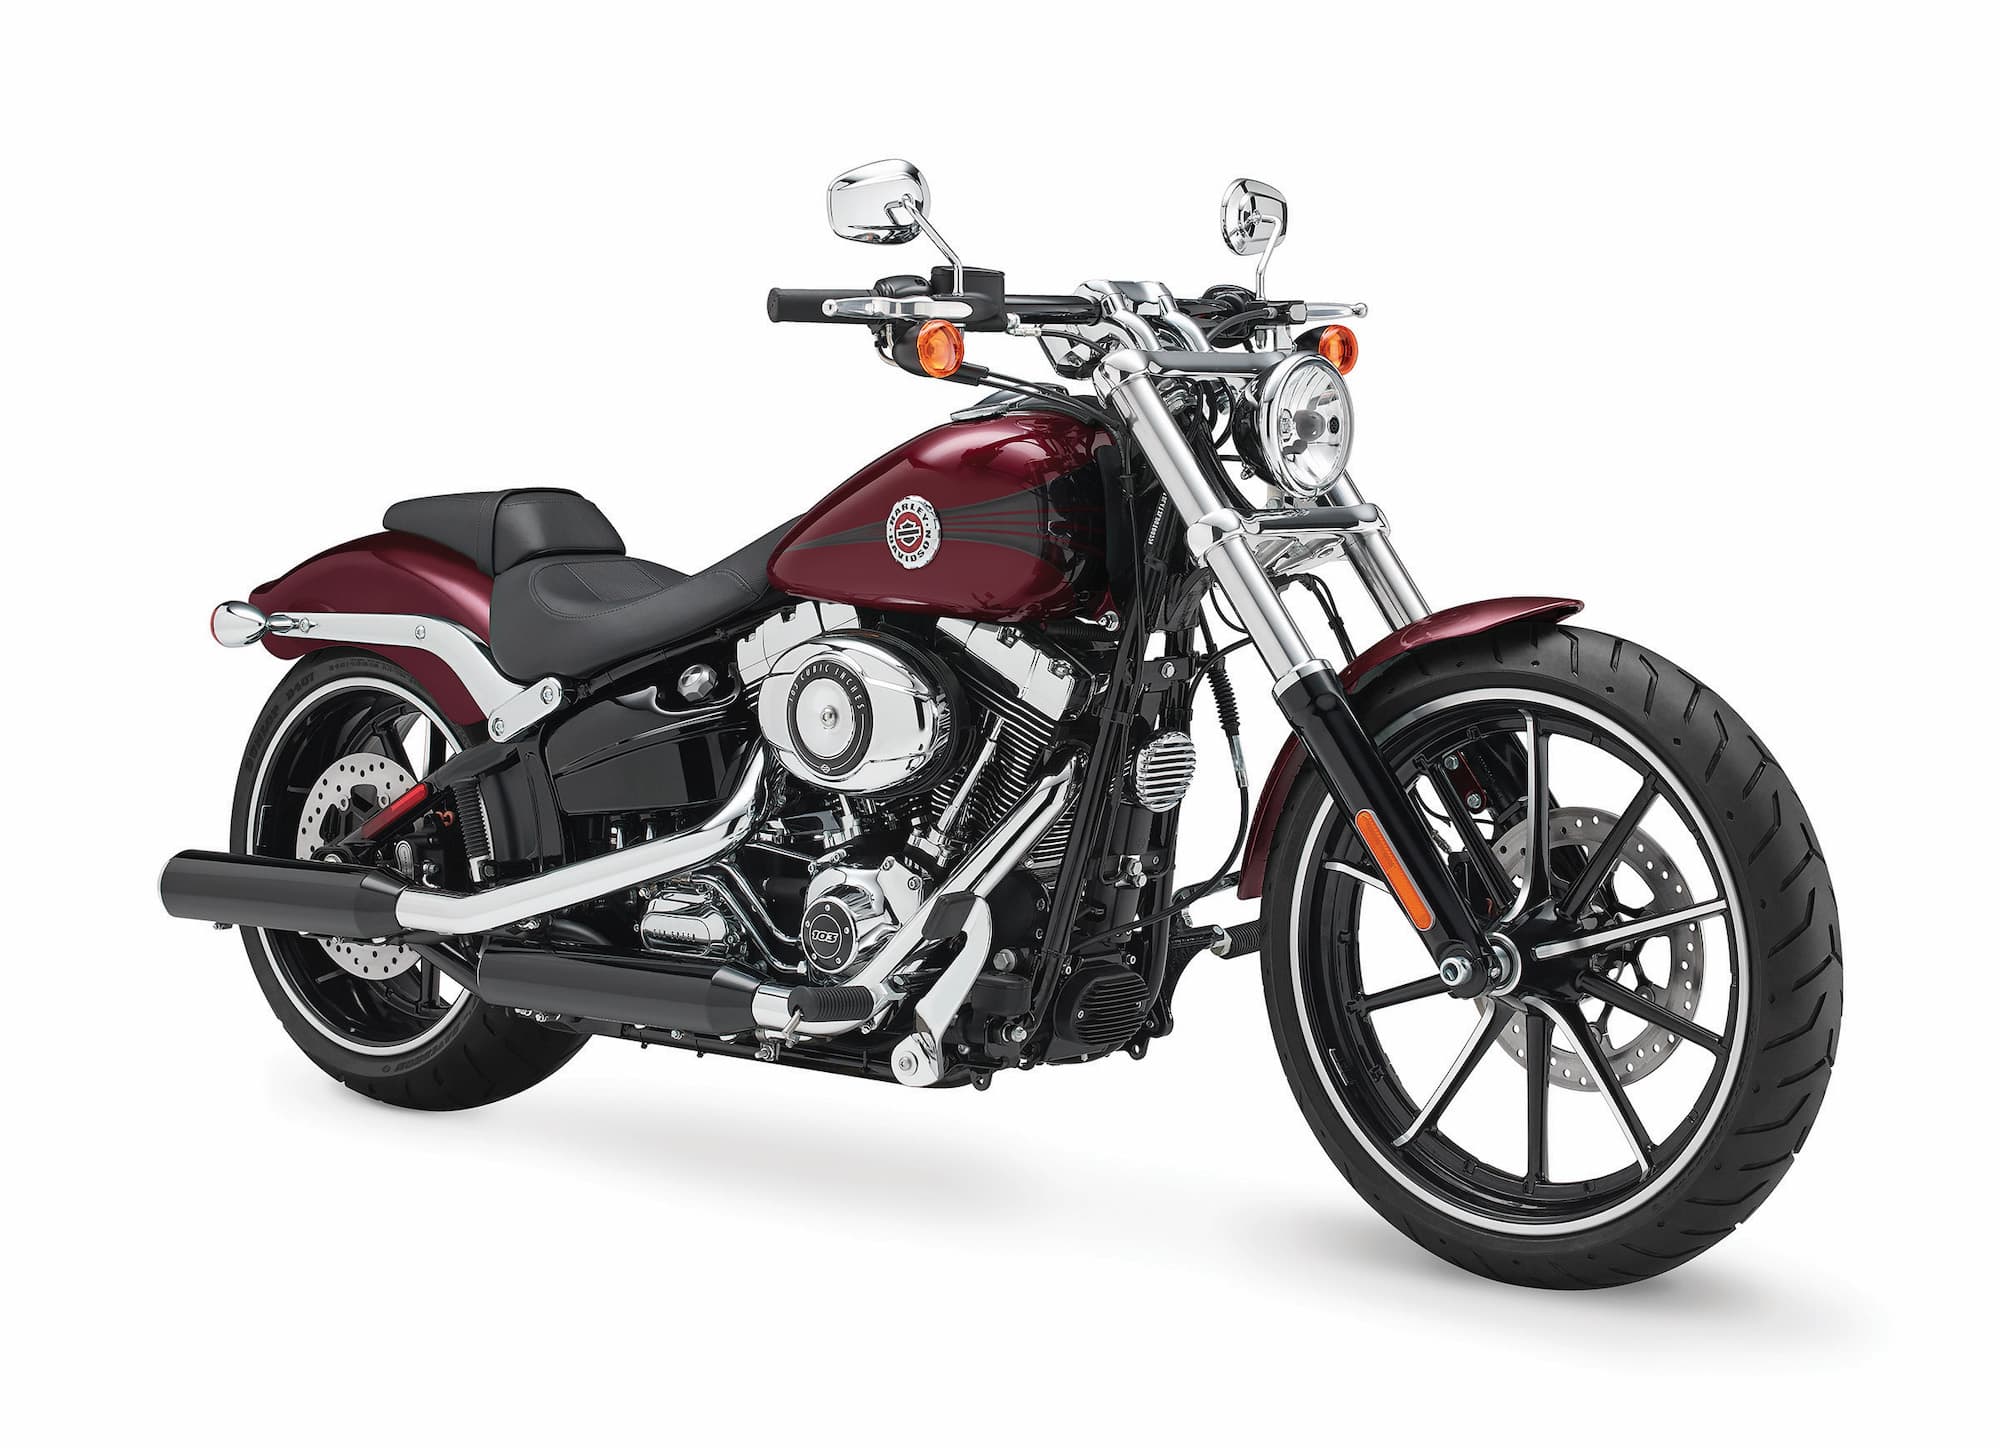 2015 Harley-Davidson FXSB Breakout red rhs 3-4